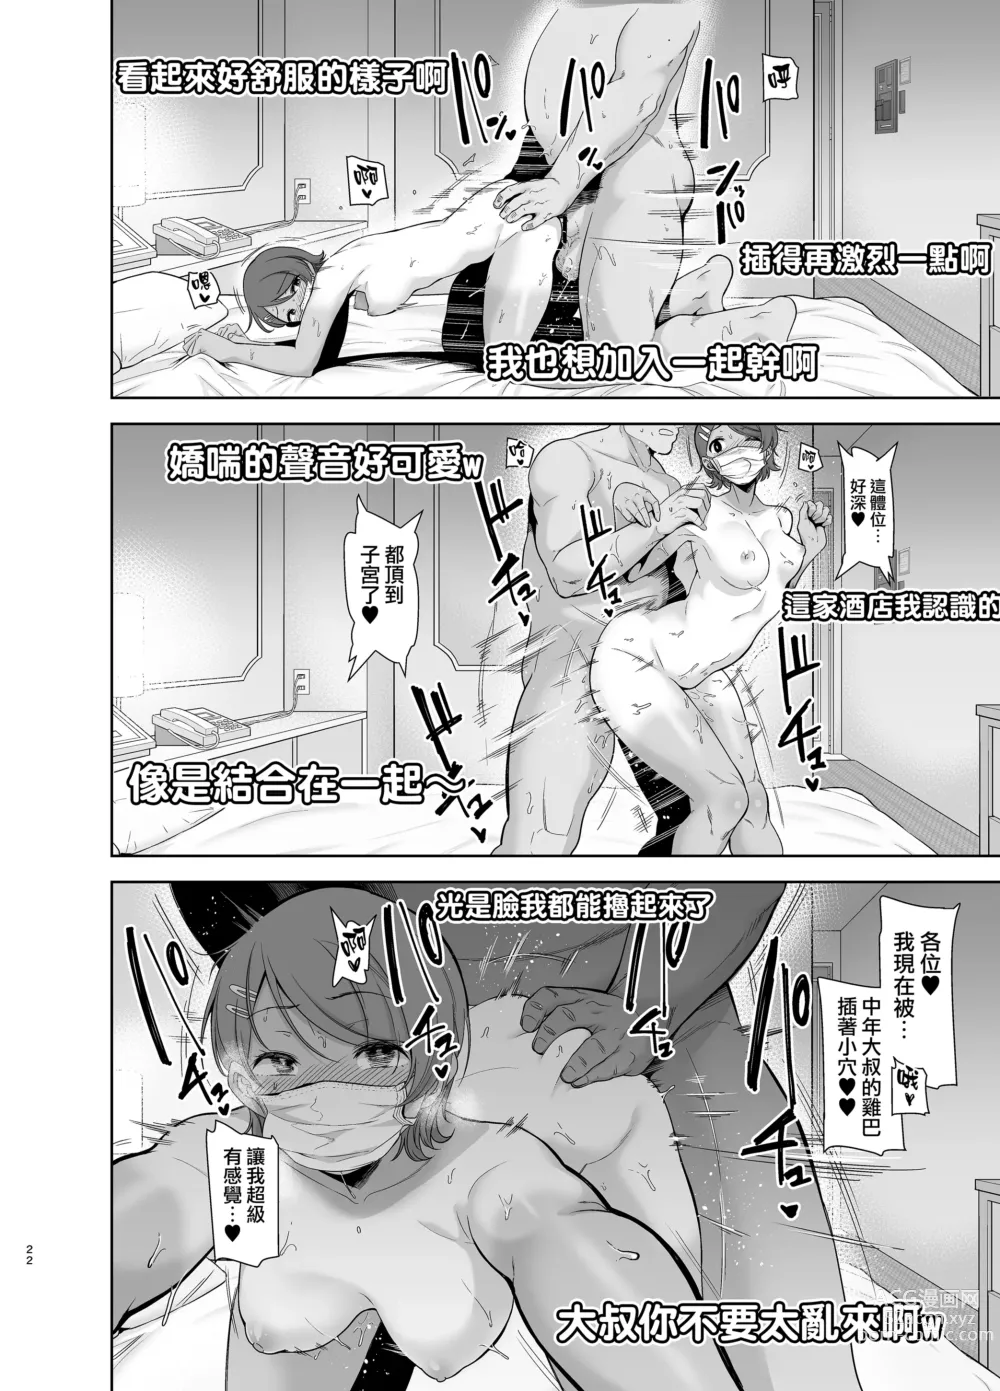 Page 22 of manga 聖華女学院高等部公認竿おじさん 2